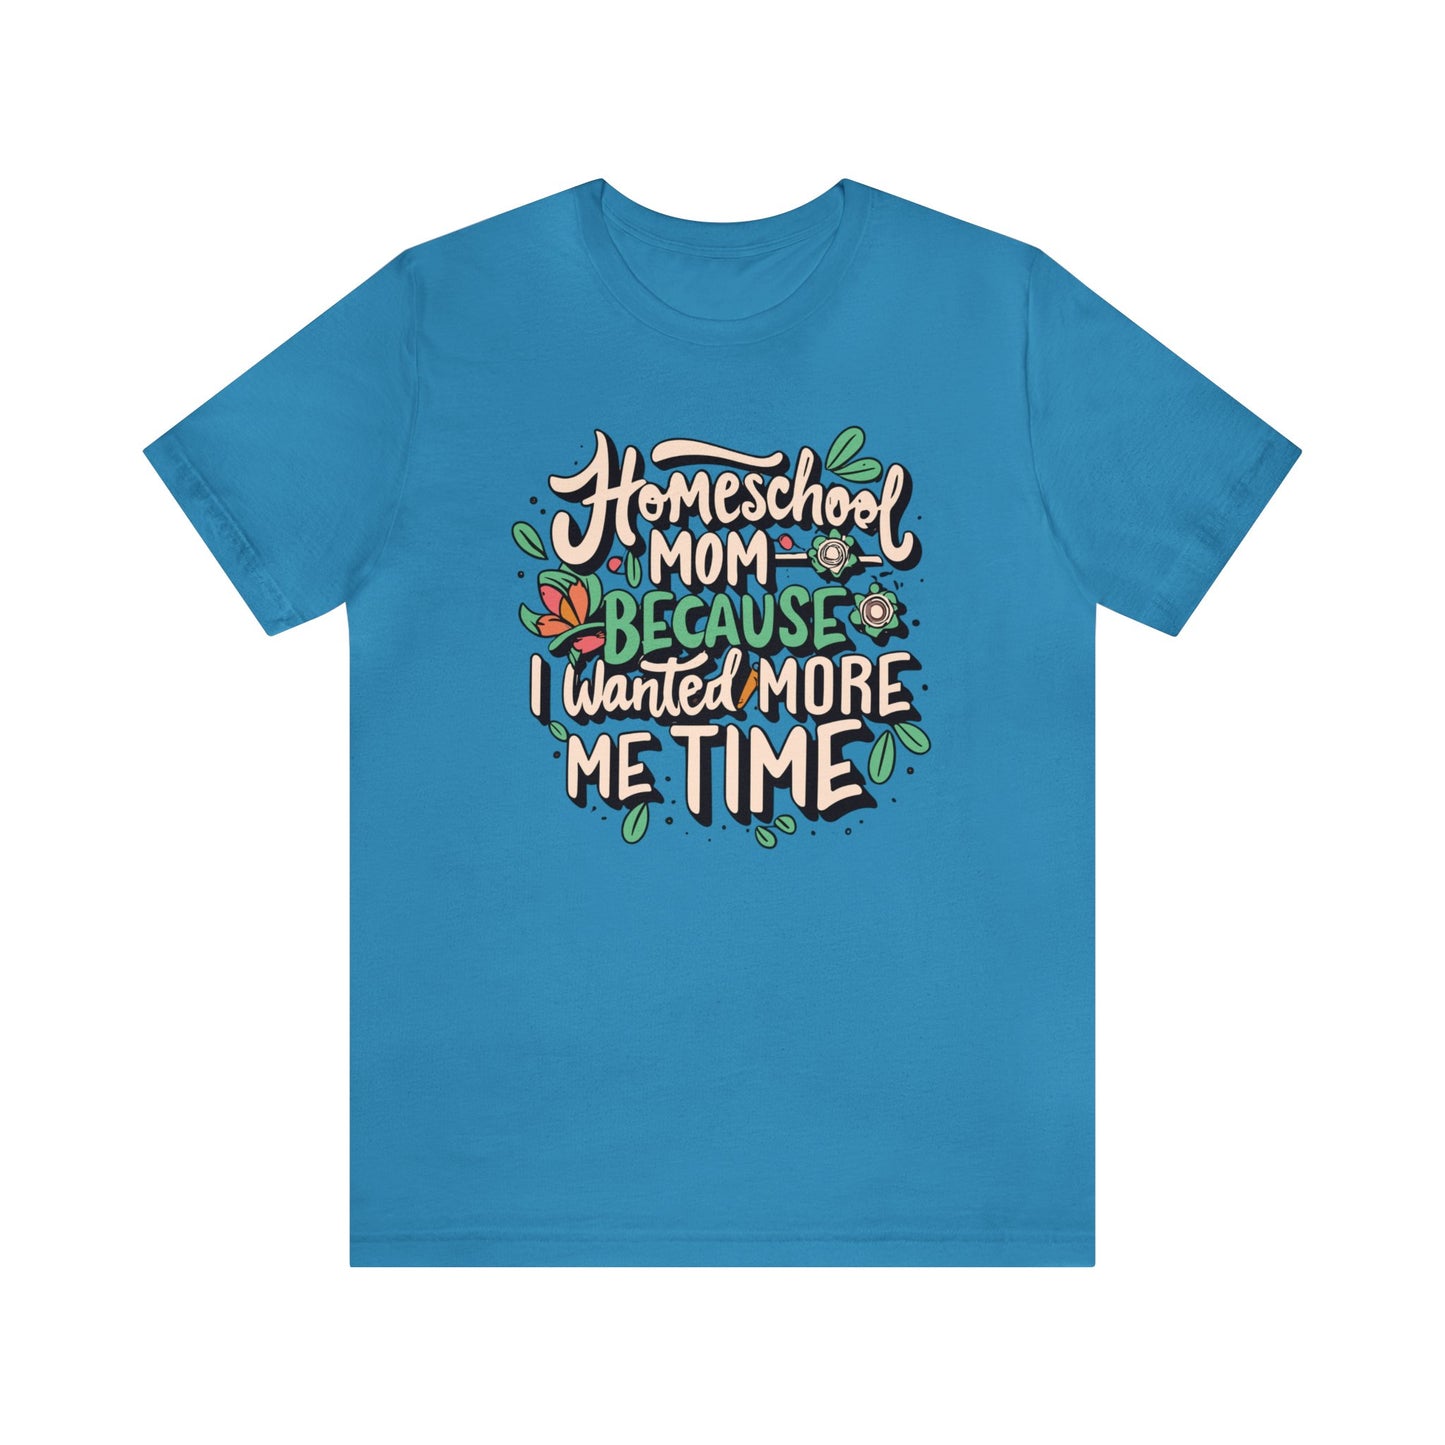 Homeschool Mom T-shirt - "Homeschool Mom Because I Wanted More Me Time"